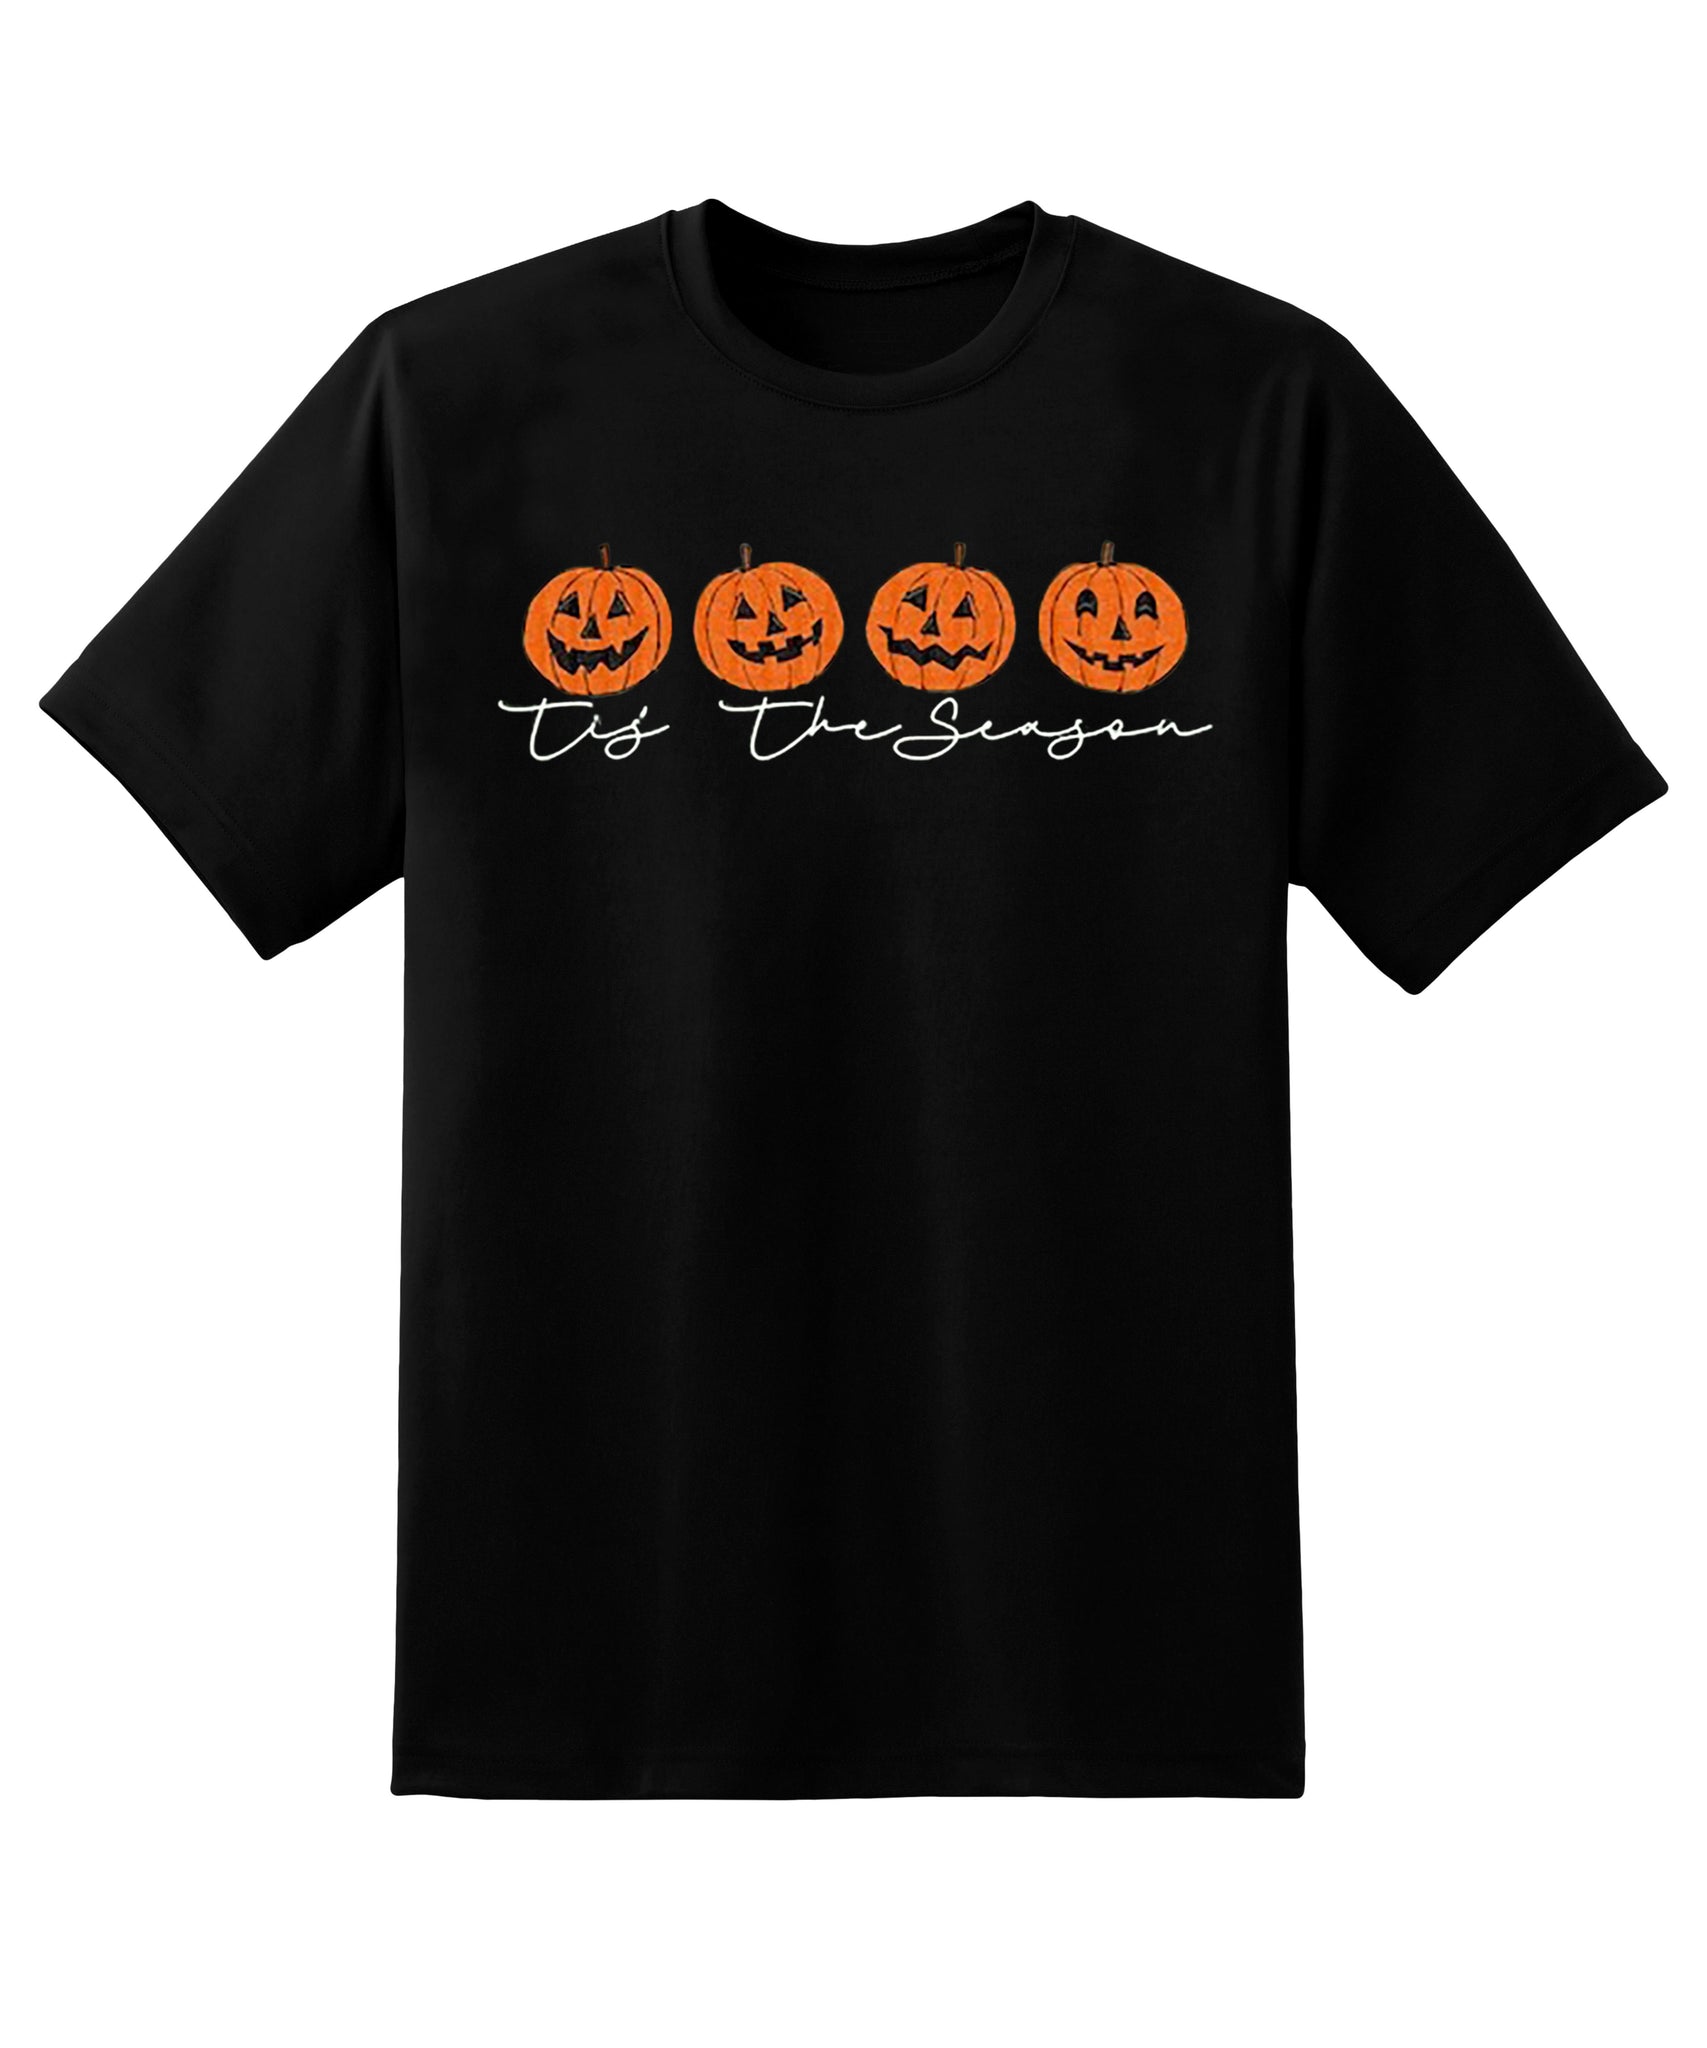 Skitongift Tis The Season To Be Spooky Shirt T-Shirt,Funny Halloween Tee,Gift For Halloween,Spooky Shirt,Halloween Shirt,Halloween Party Shirt